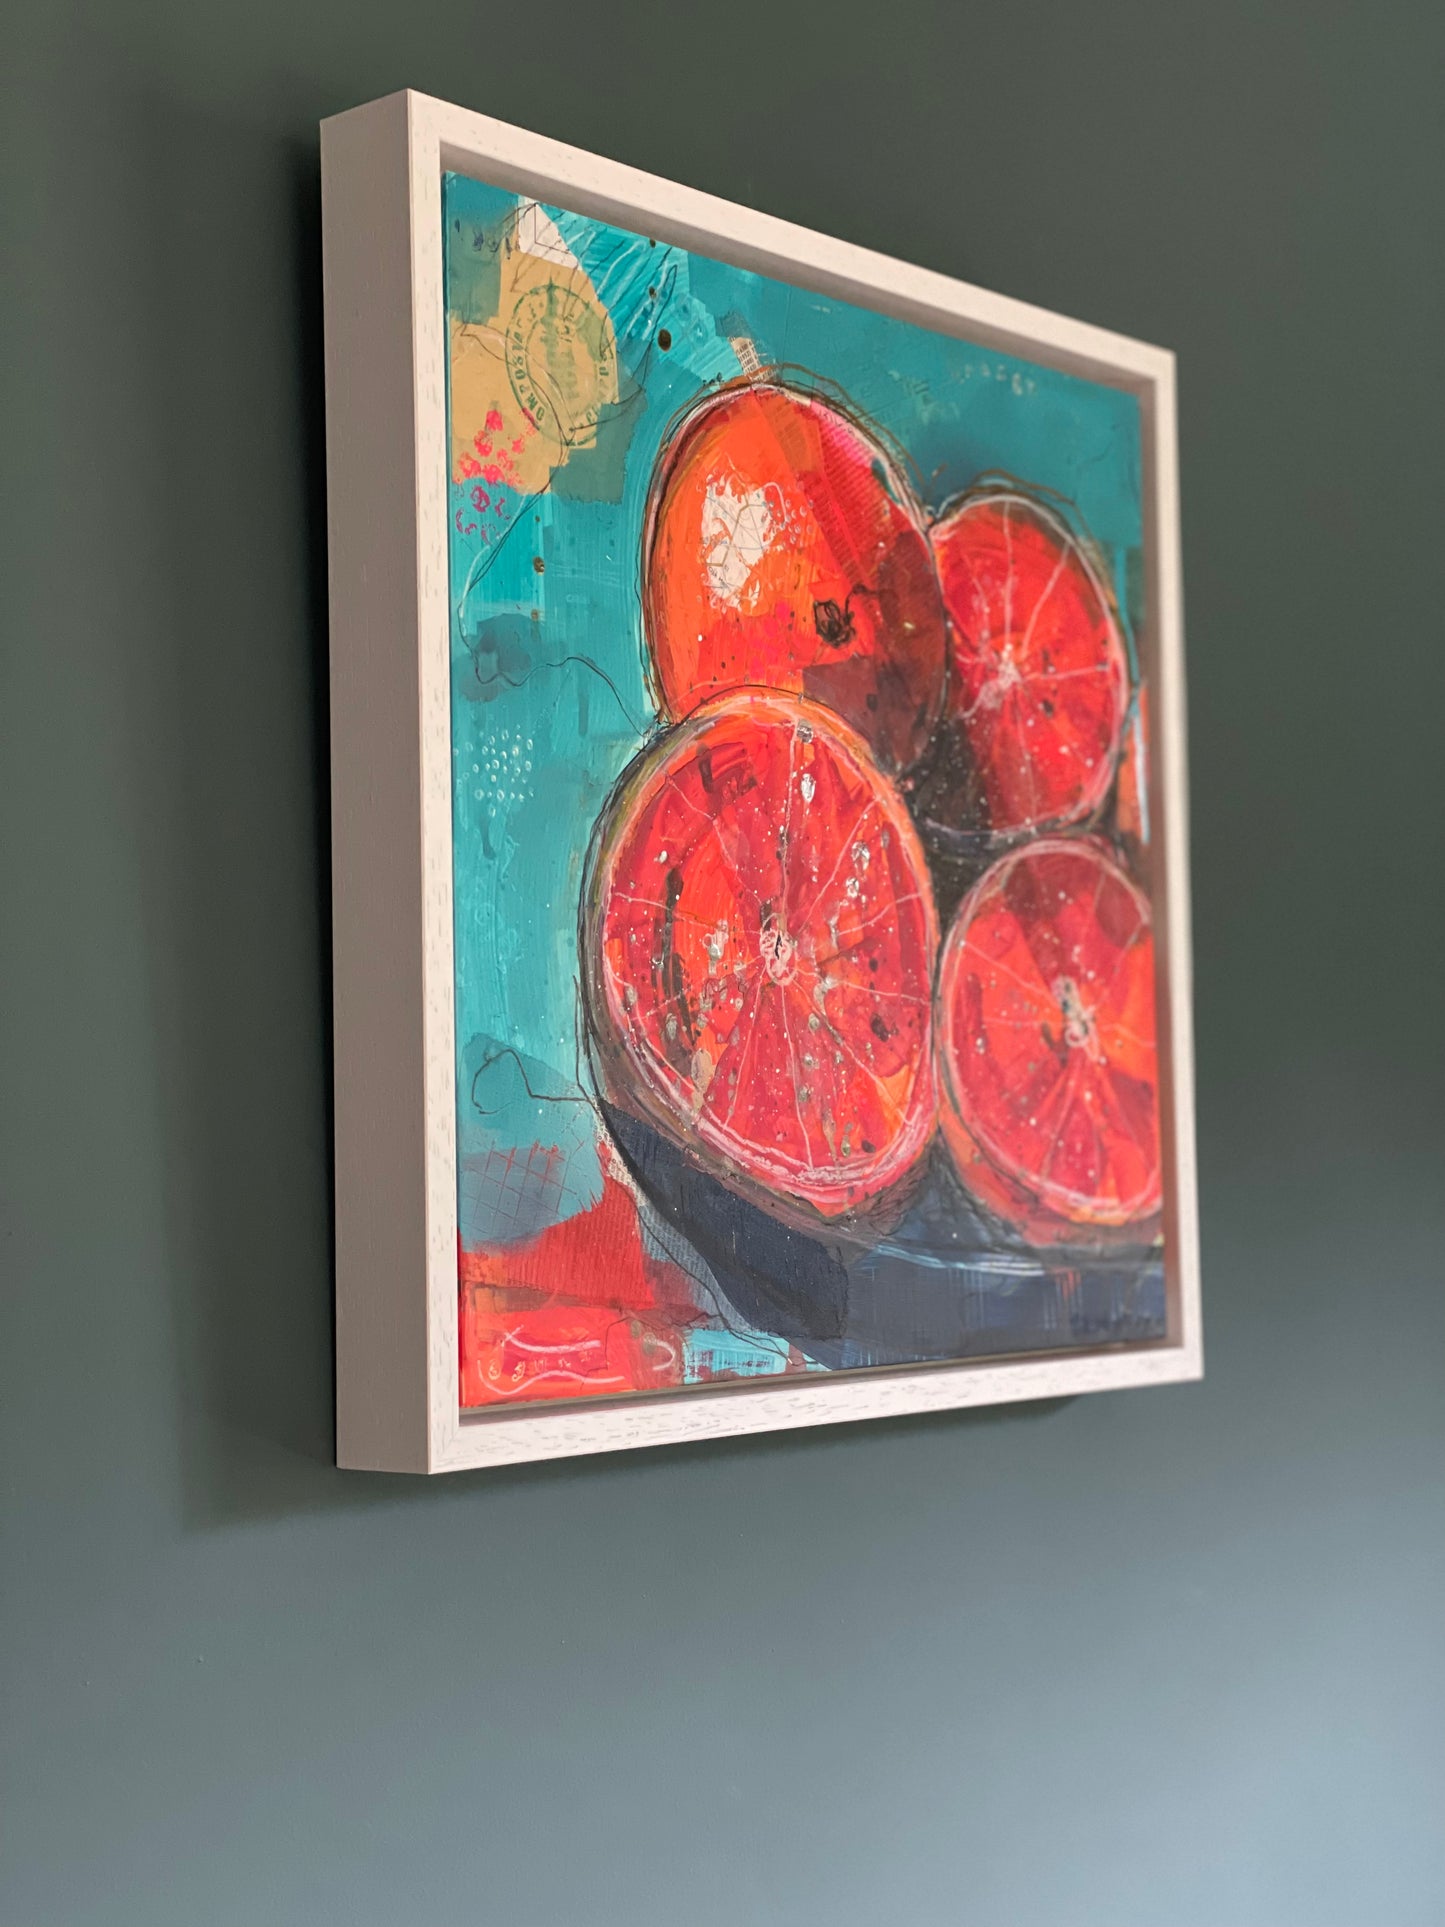 'Fruta: Blood Oranges' [Original Painting]